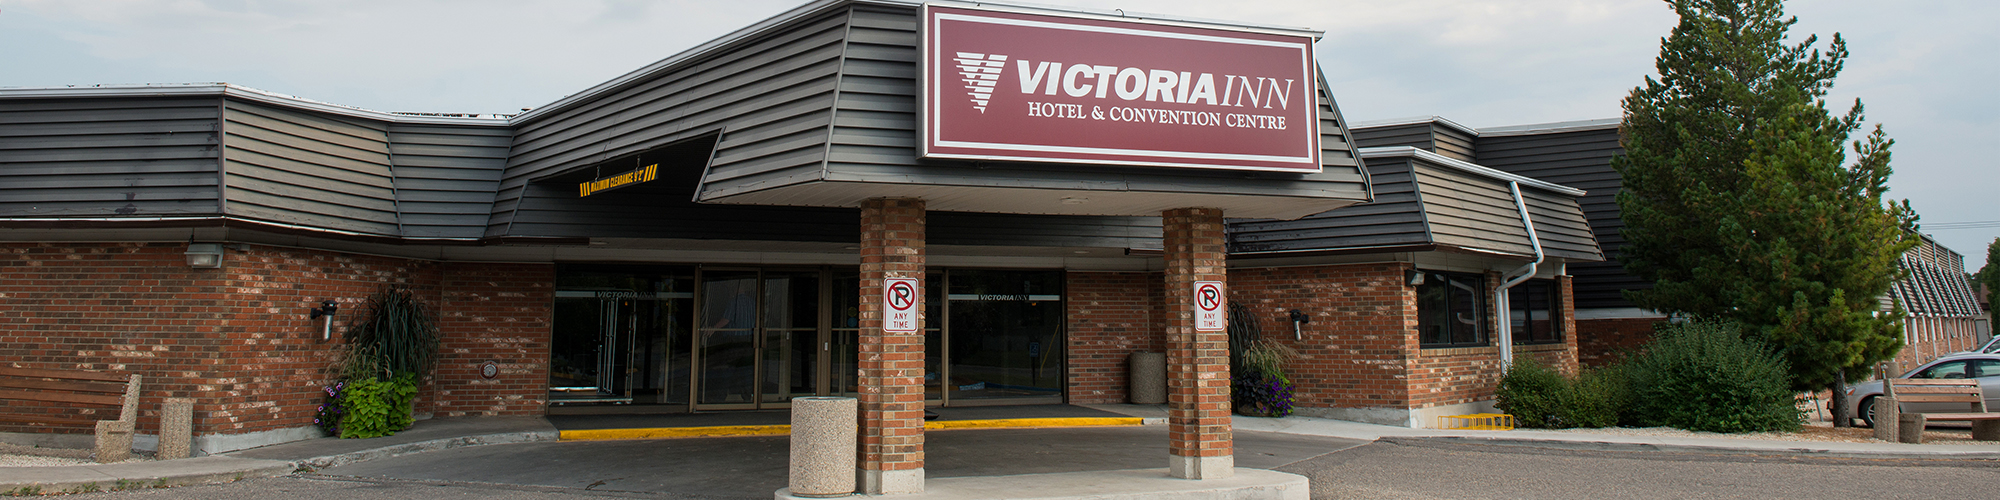 Main entrance to the Victoria Inn Hotel & Convention Centre, Winnipeg, Manitoba